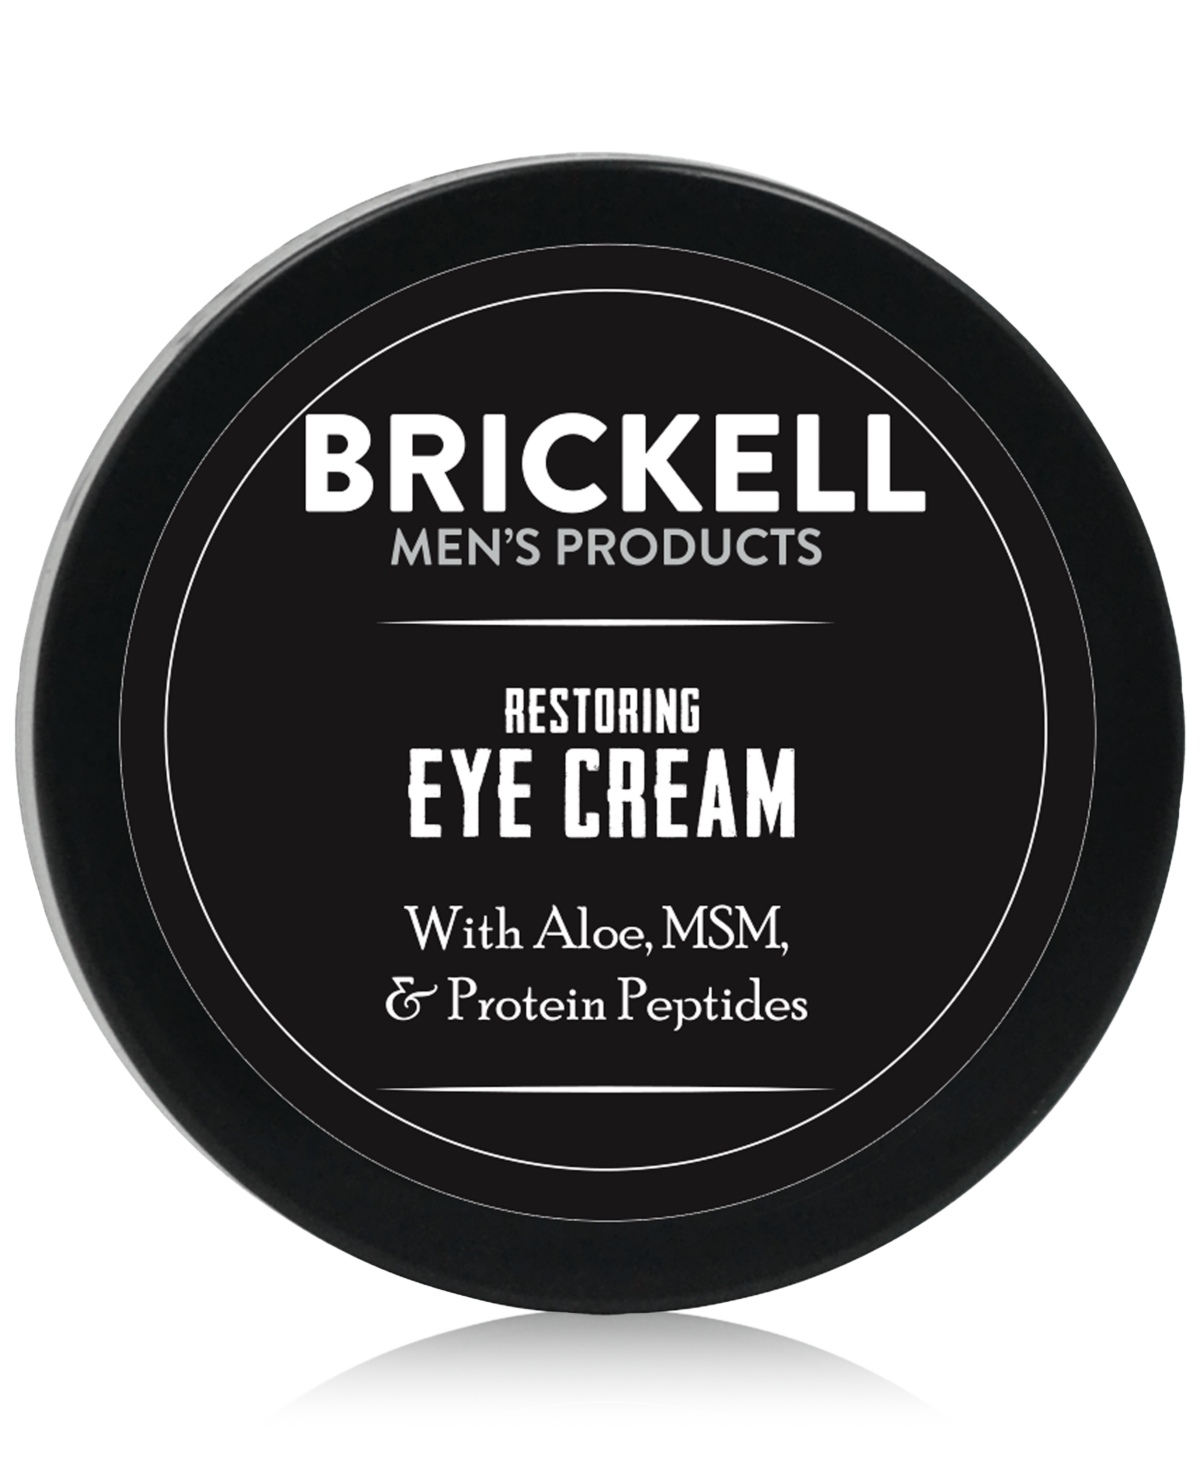 Brickell Men's Products Restoring Eye Cream, 0.5 oz.